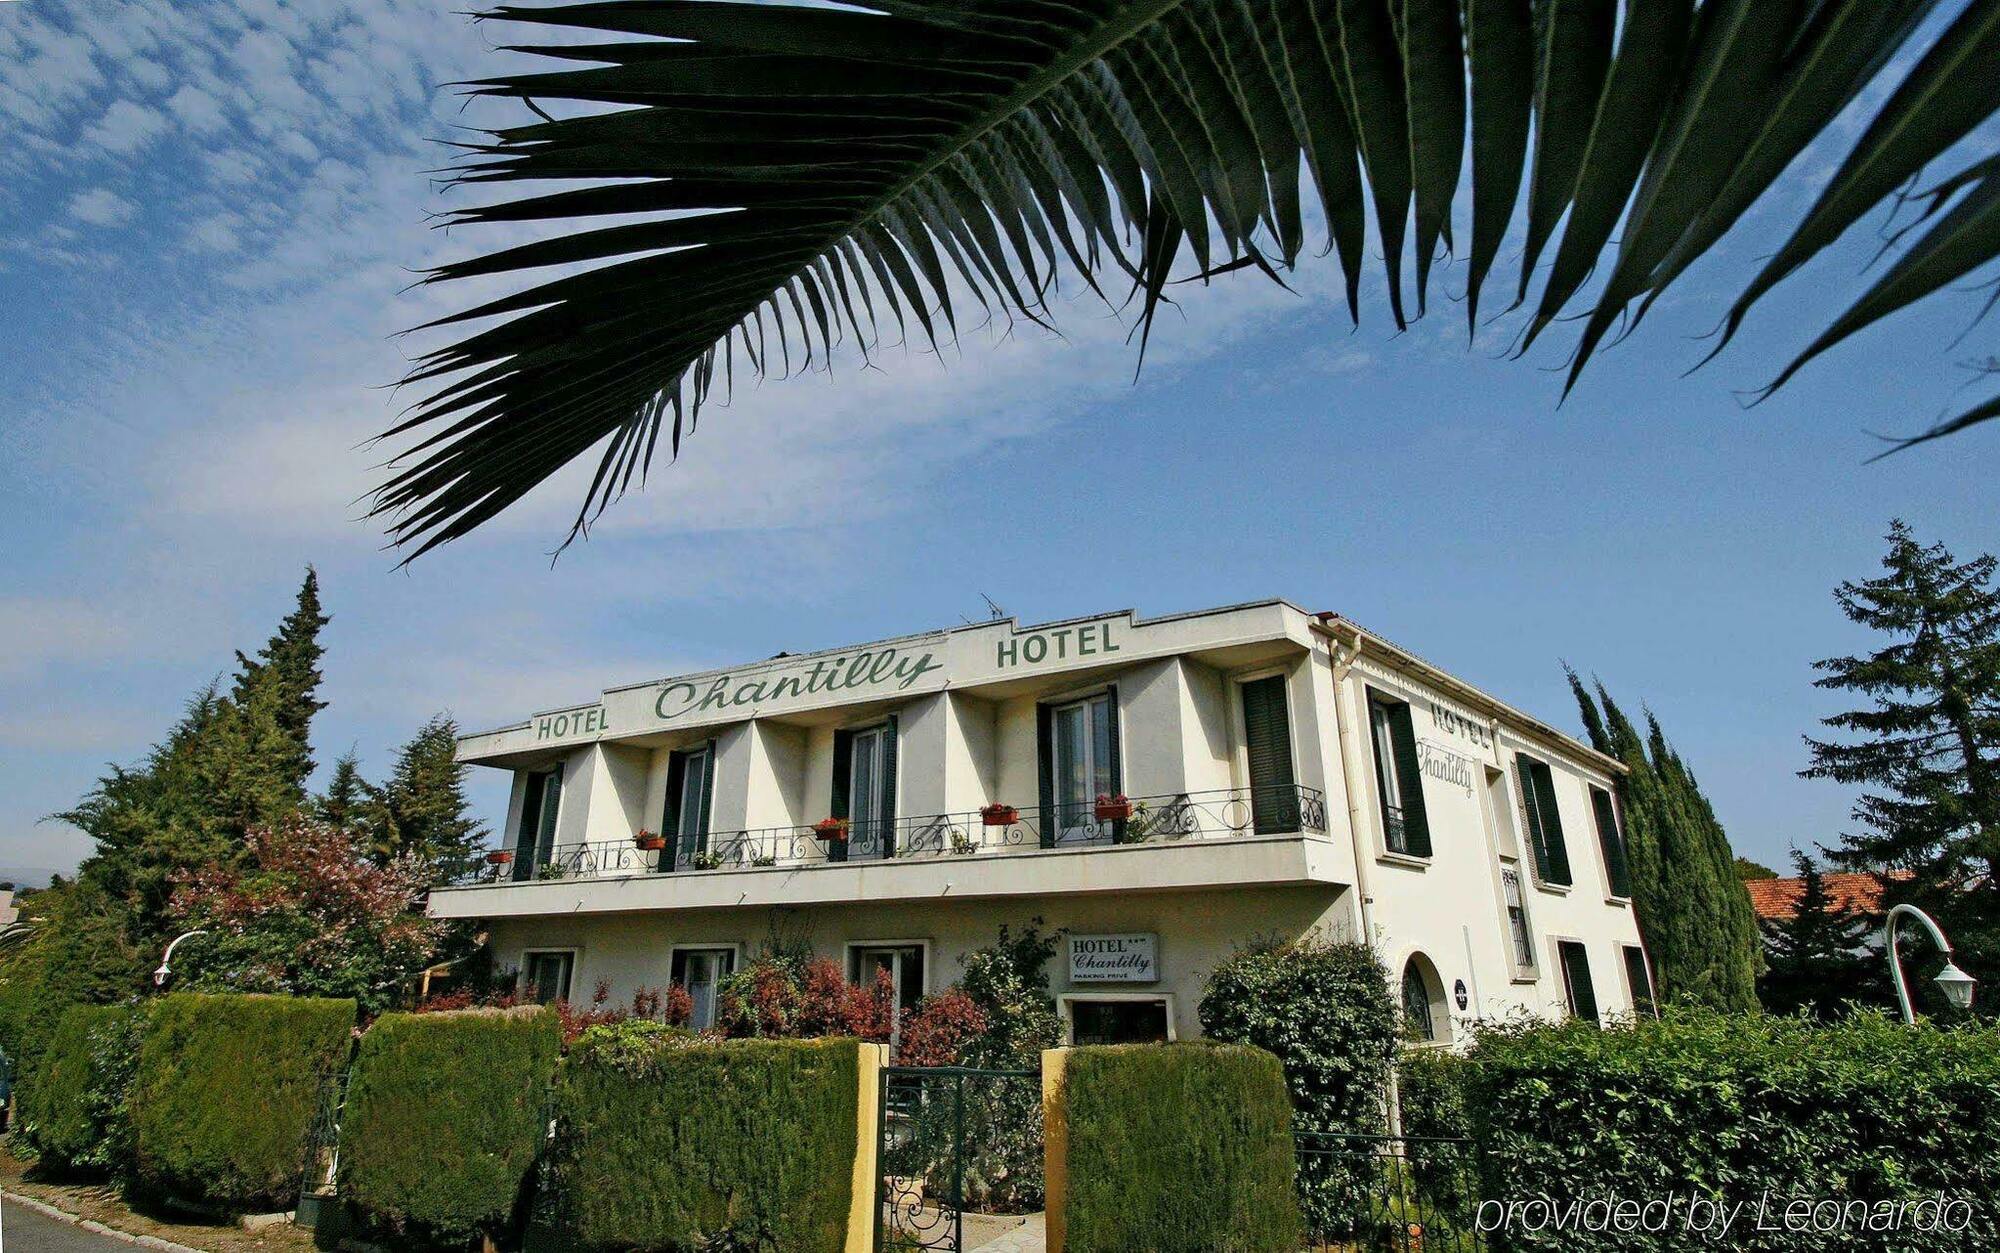 Hotel Bleu Riviera Cagnes-sur-Mer Exterior photo